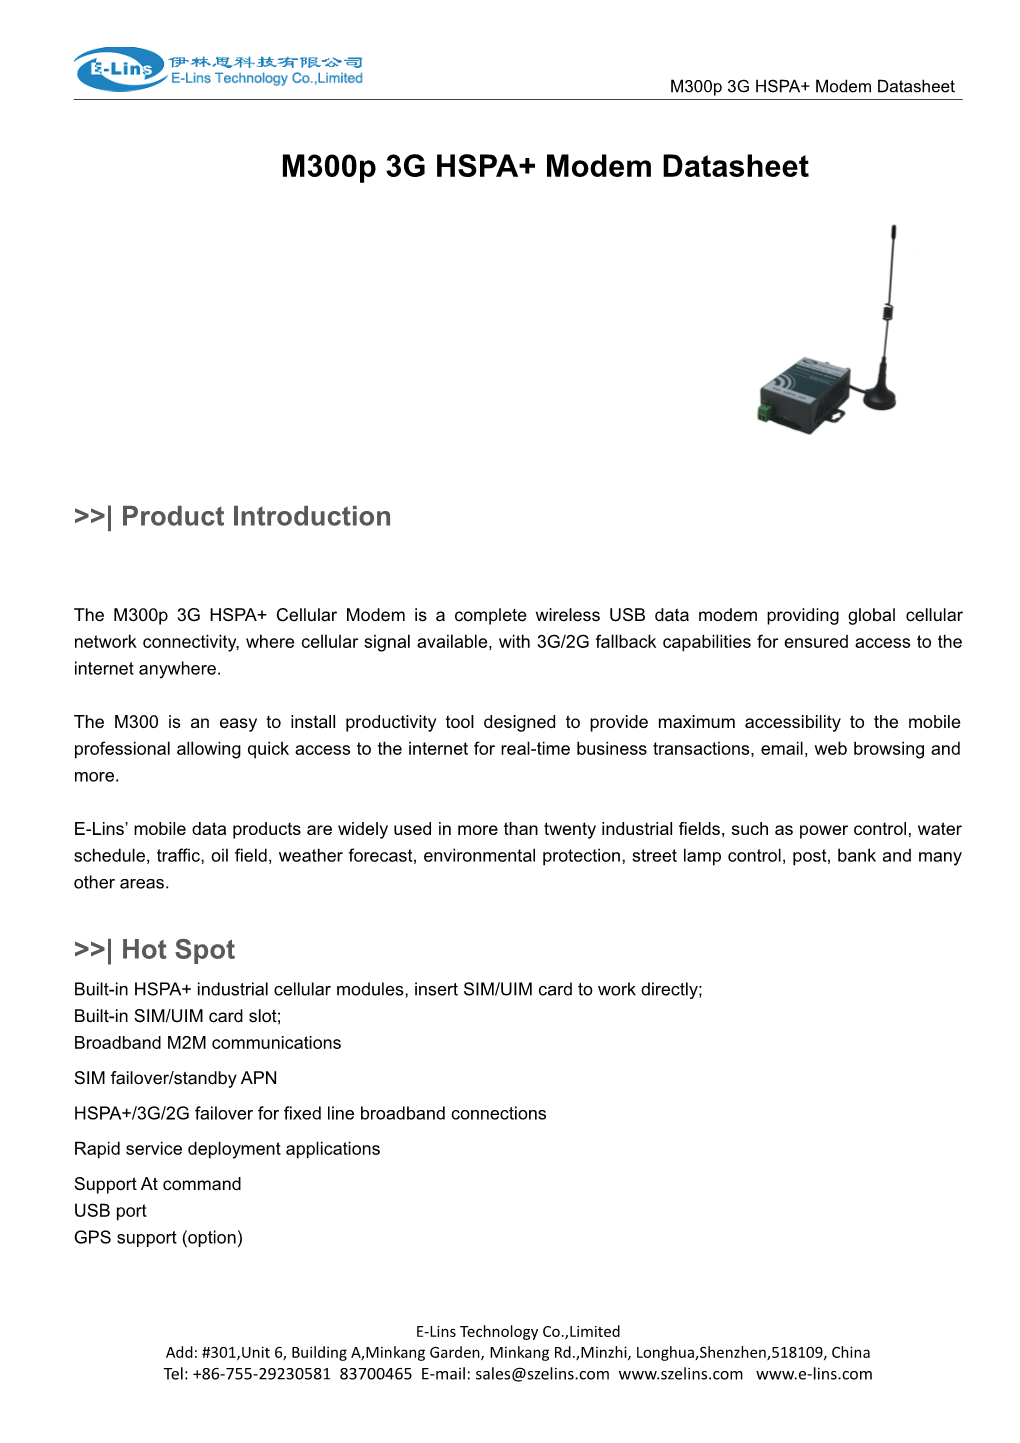 M300p 3G HSPA+ Modem Datasheet Specification